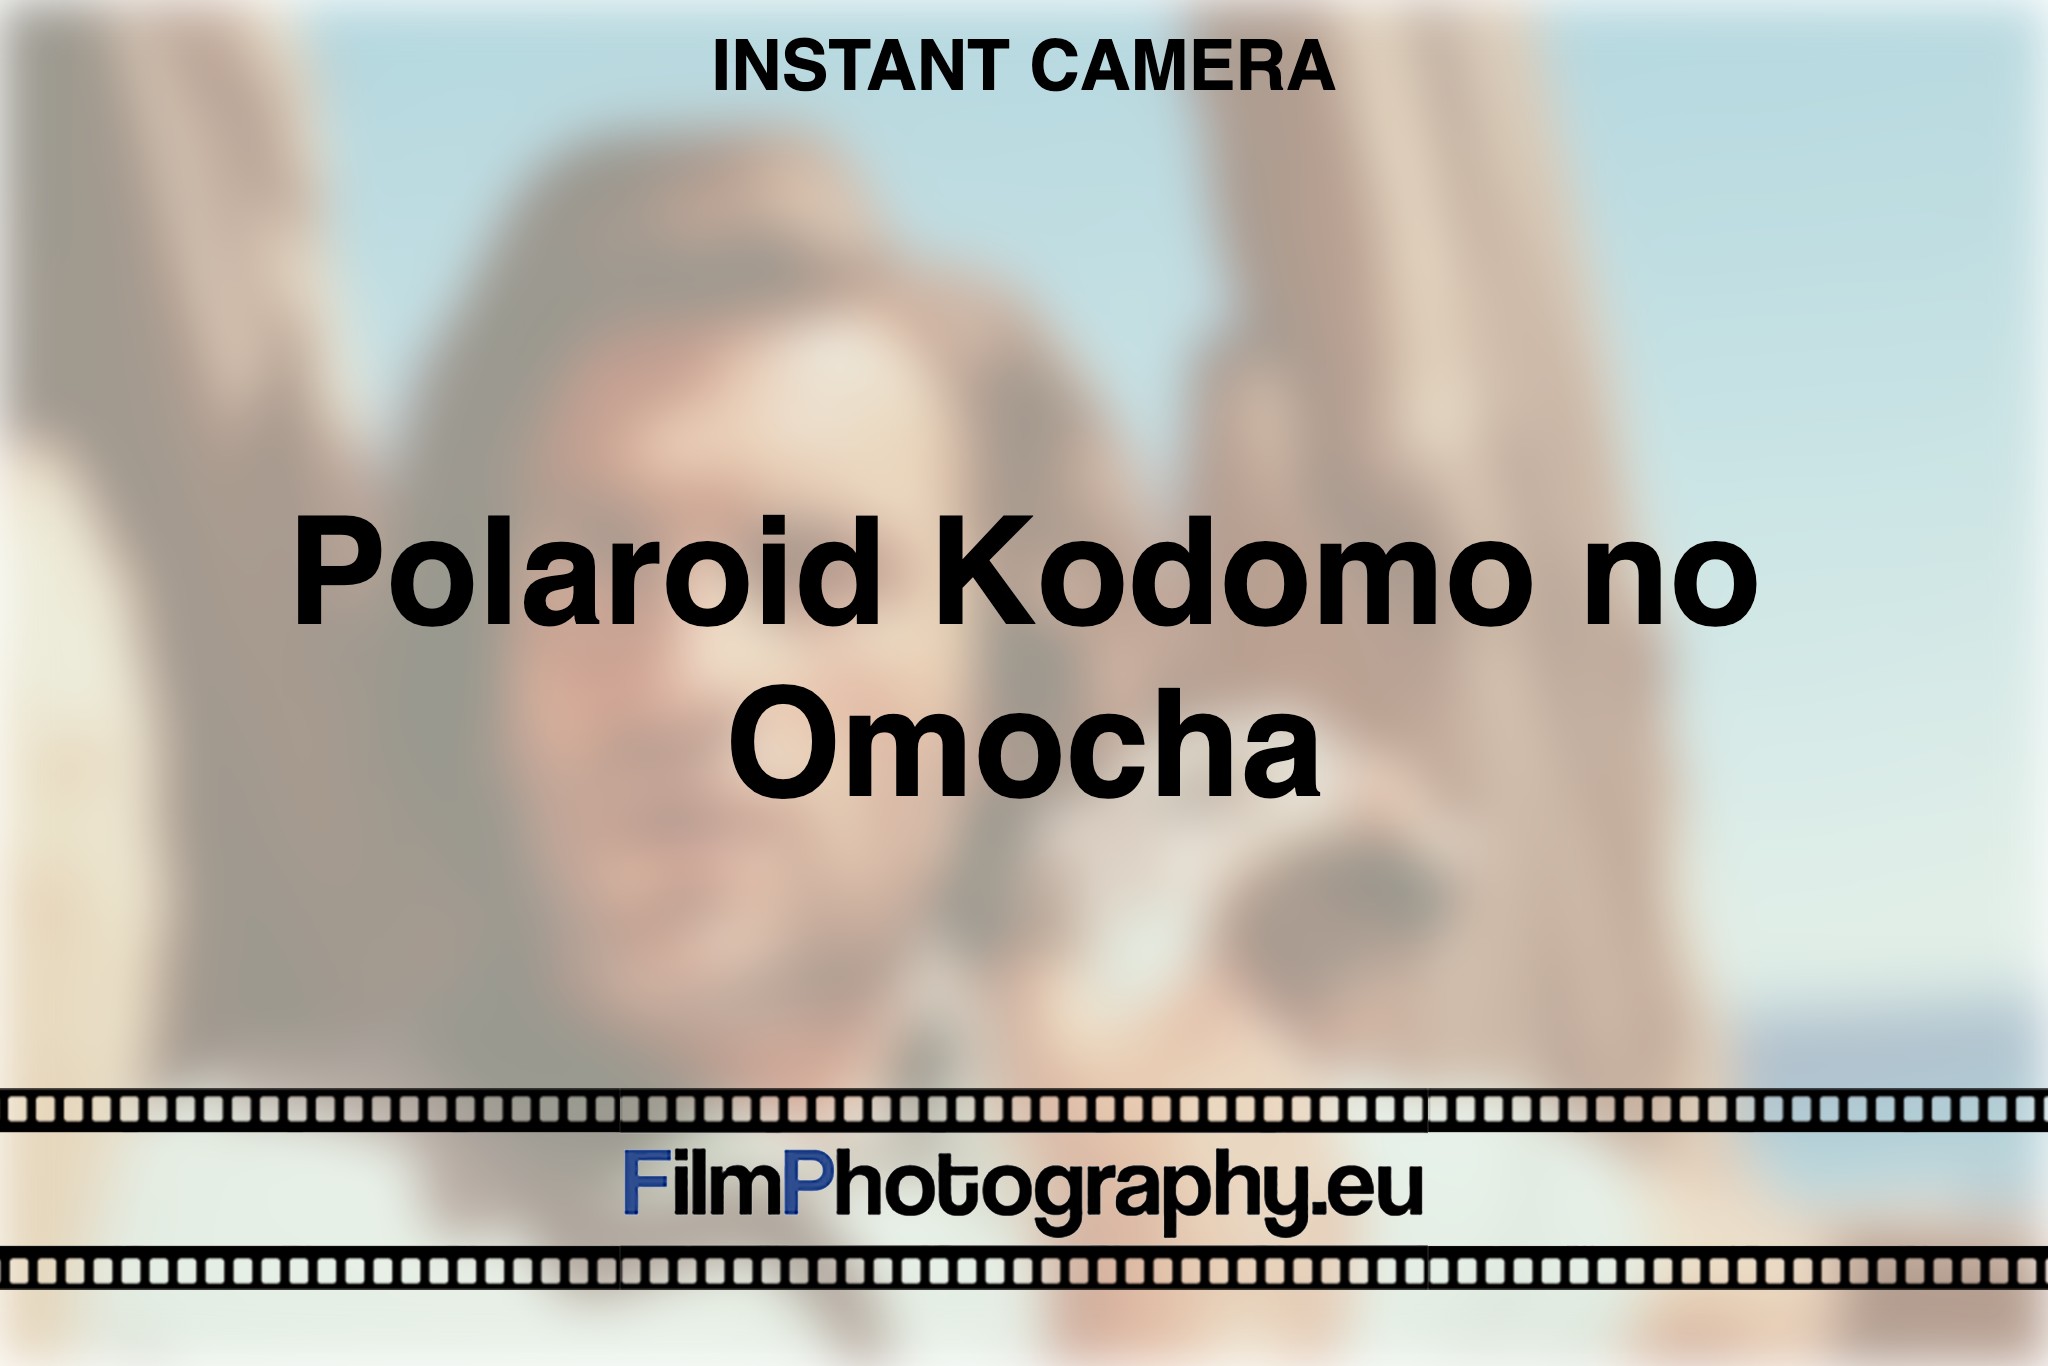 polaroid-kodomo-no-omocha-instant-camera-bnv